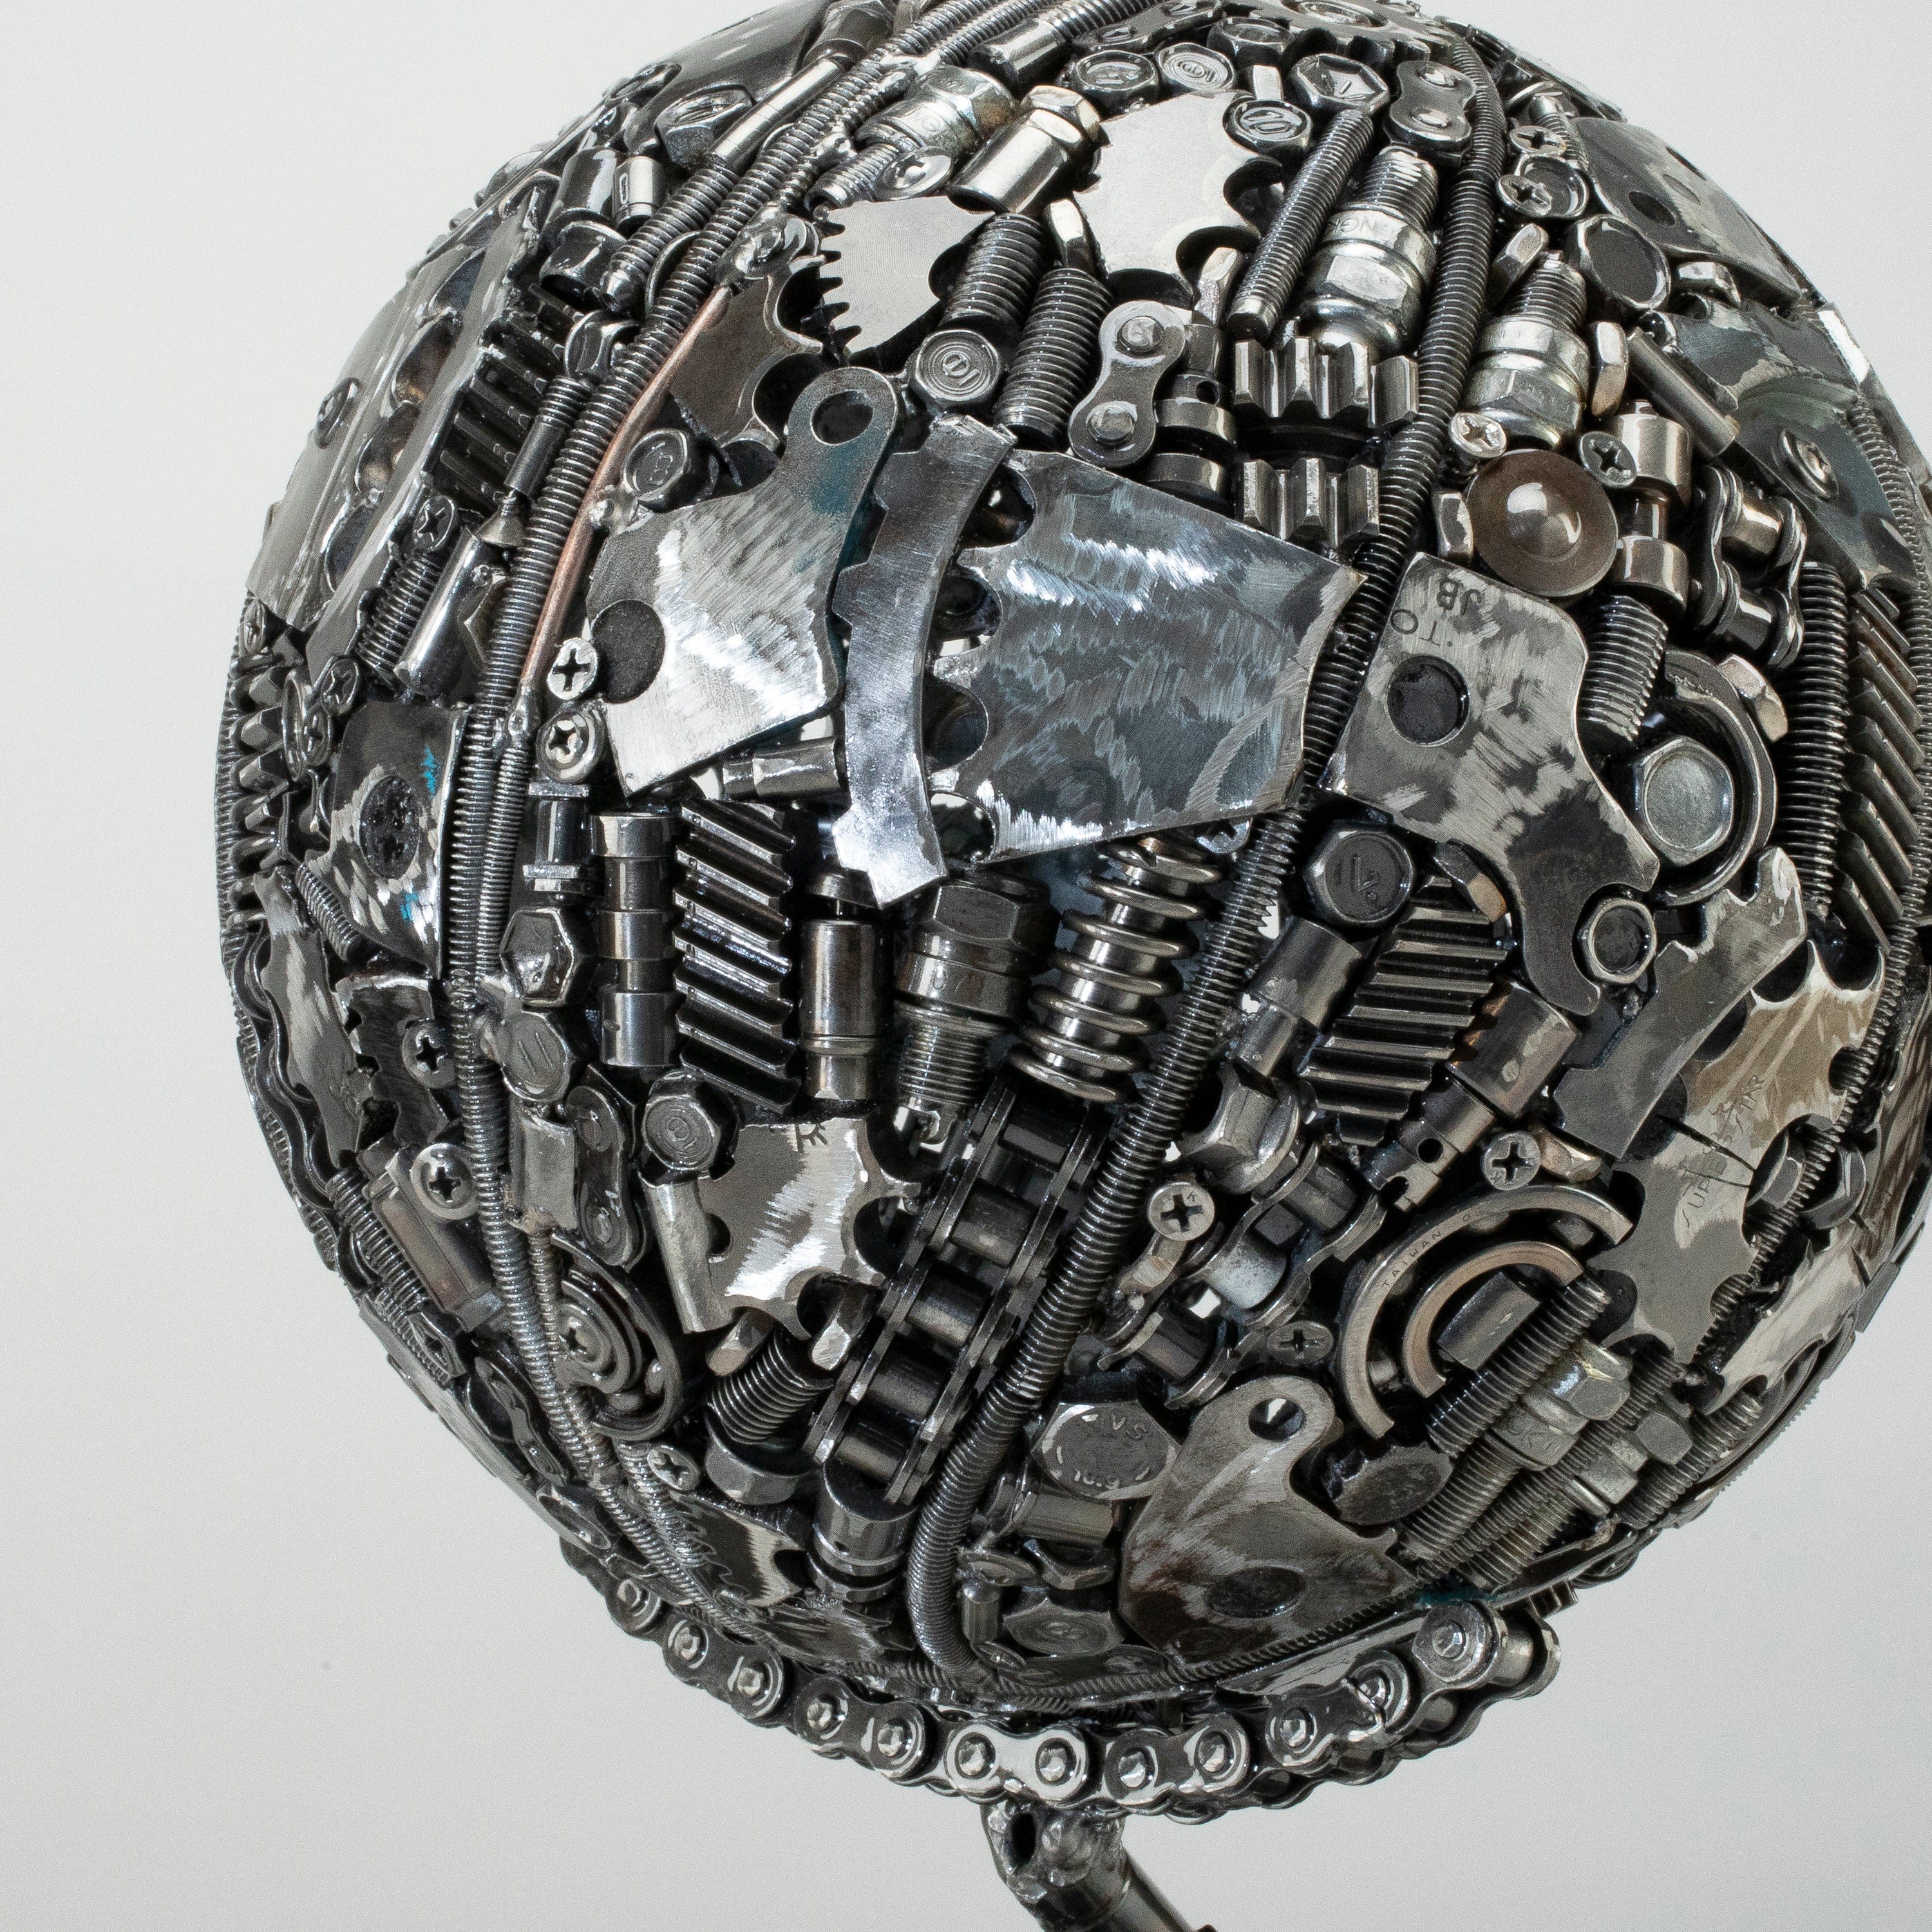 KALIFANO Recycled Metal Art 29.5" Basketball Recycled Metal Art Sculpture RMS-BBALL75-PK